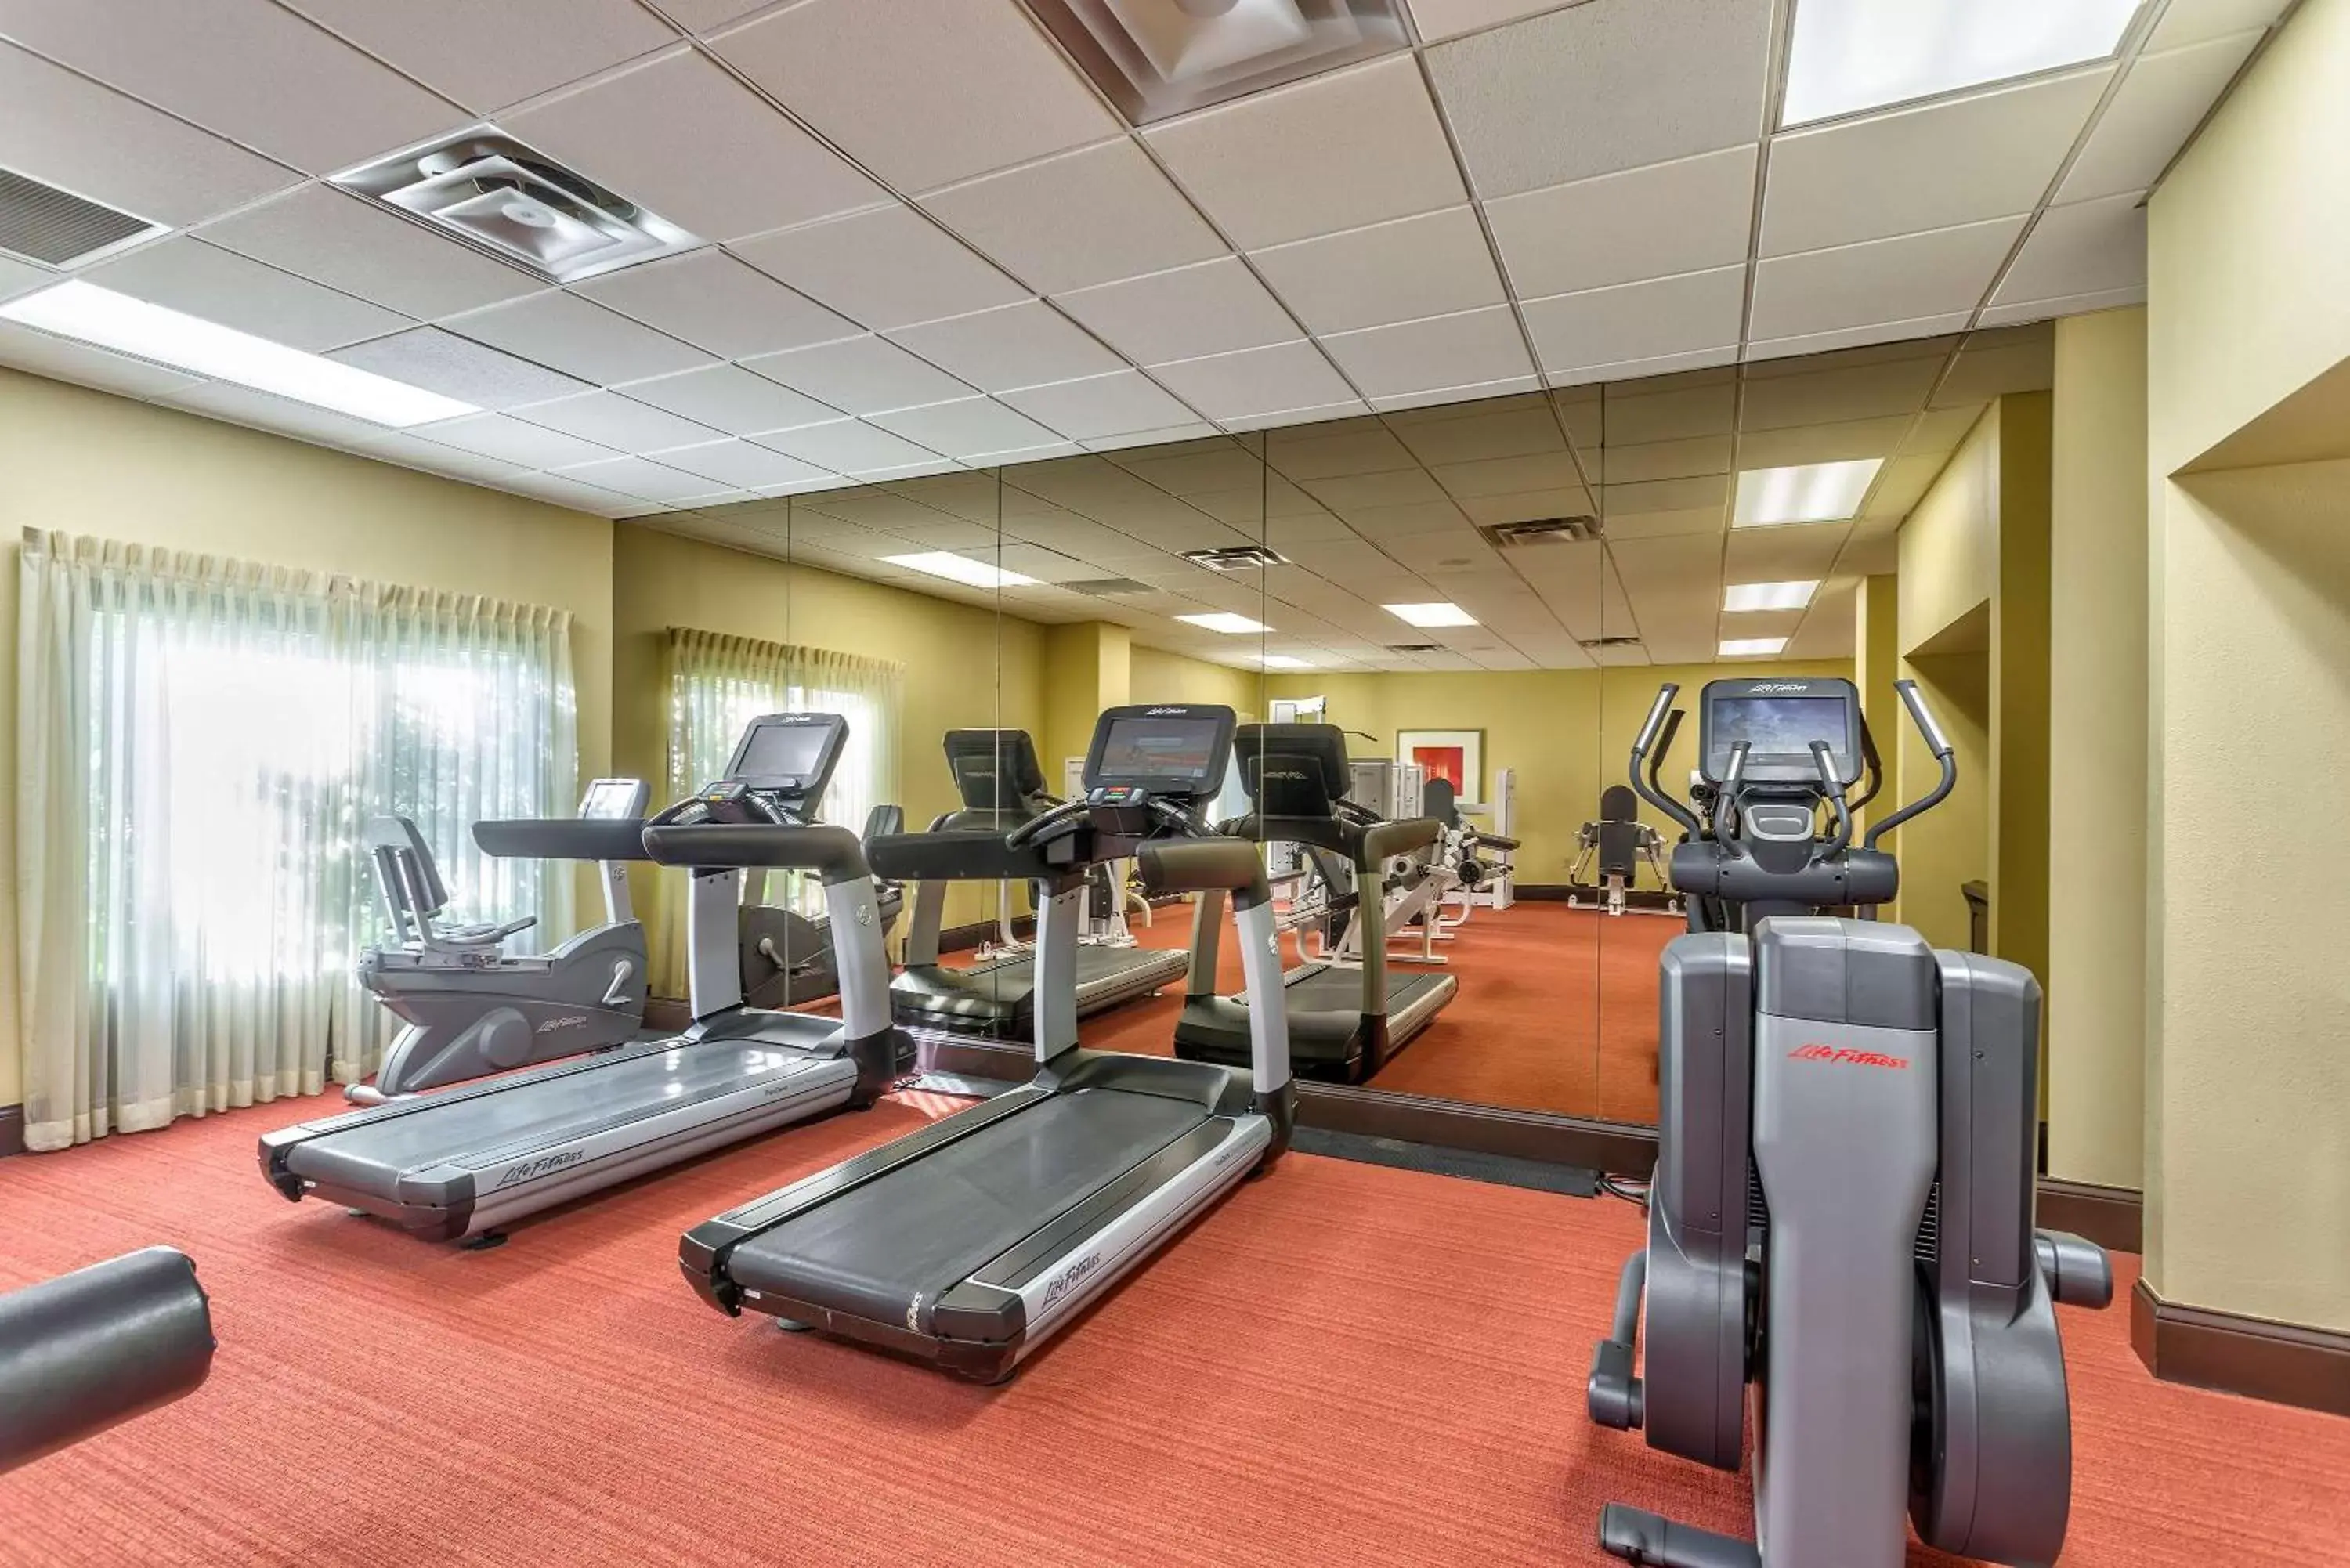 Fitness centre/facilities, Fitness Center/Facilities in Hyatt Place Kansas City/Overland Park/Convention Center